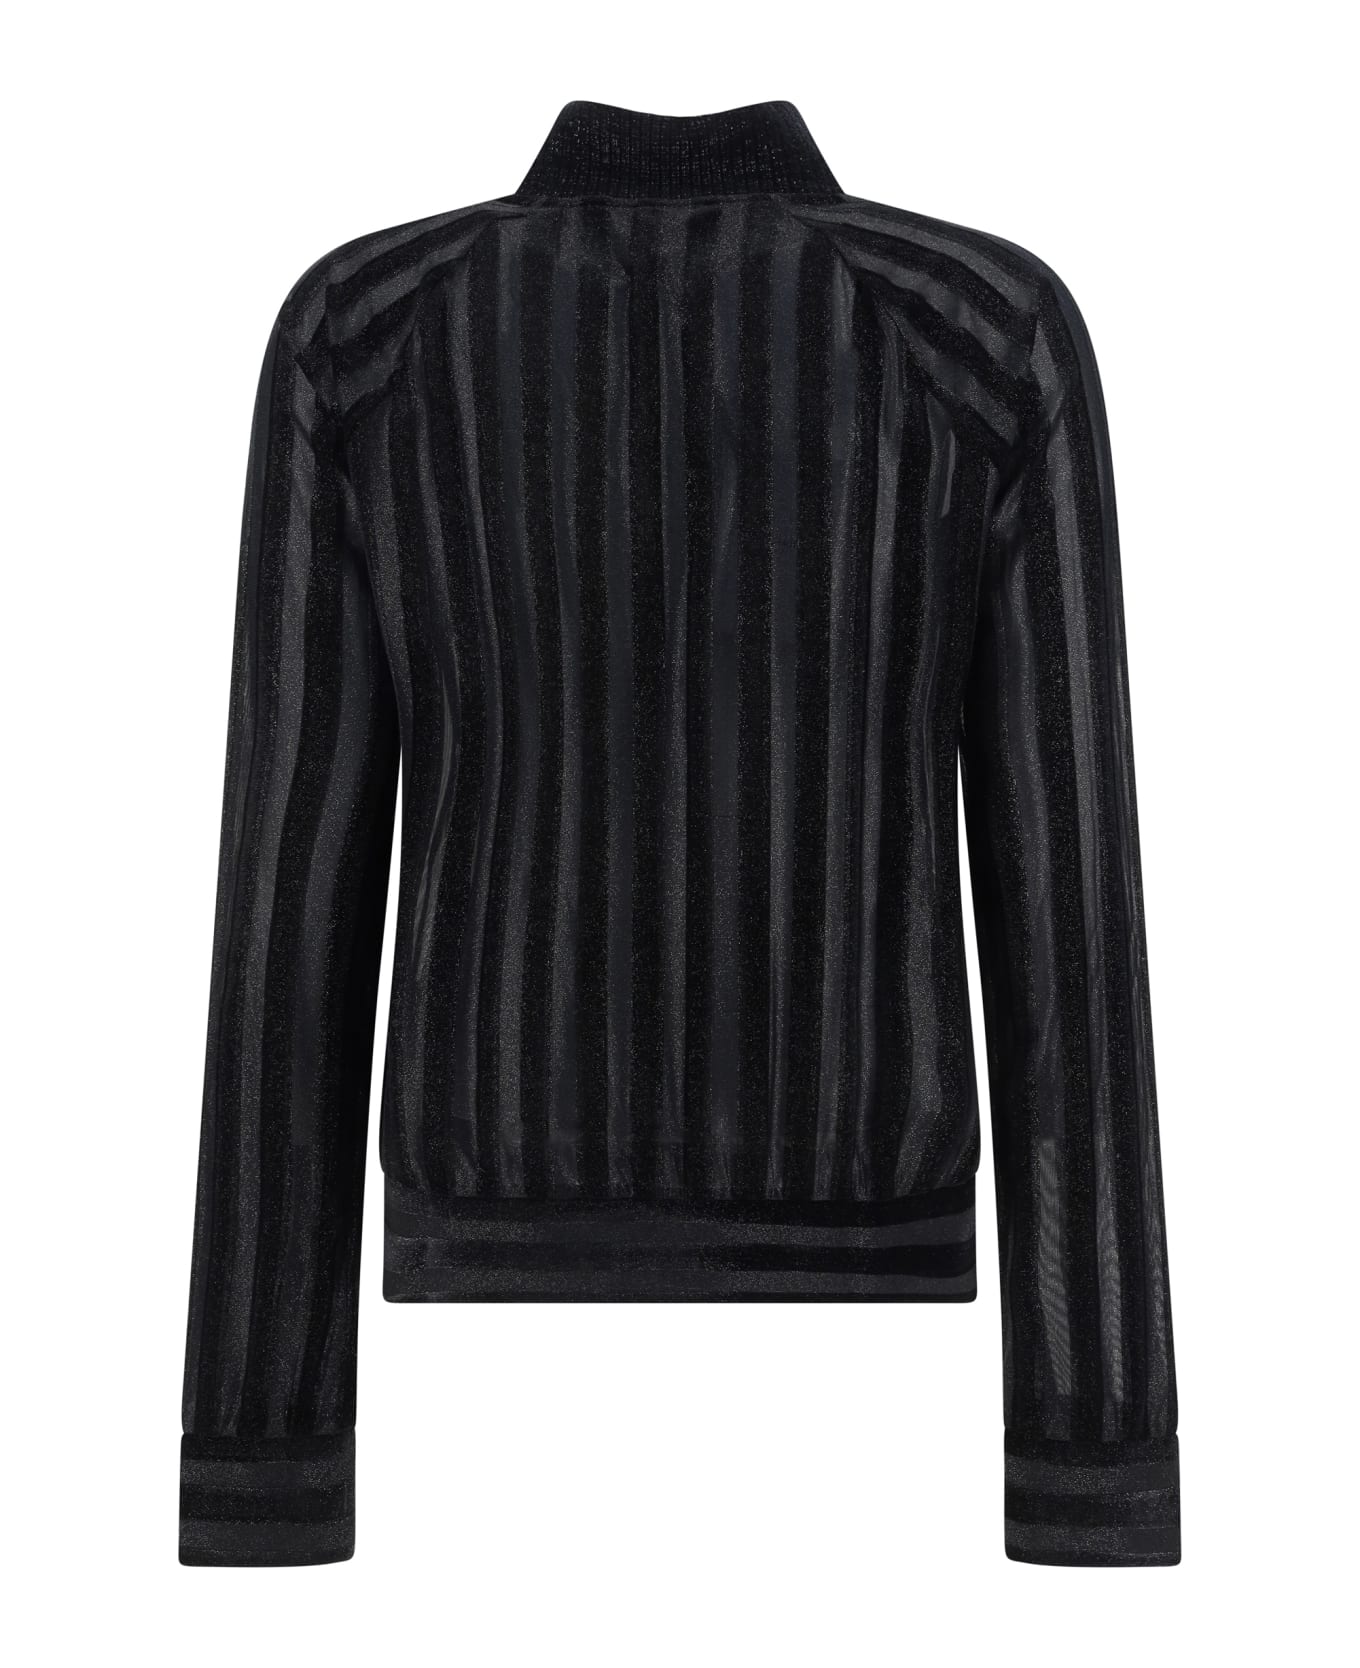 Balmain Turtleneck Sweater - Noir/argent